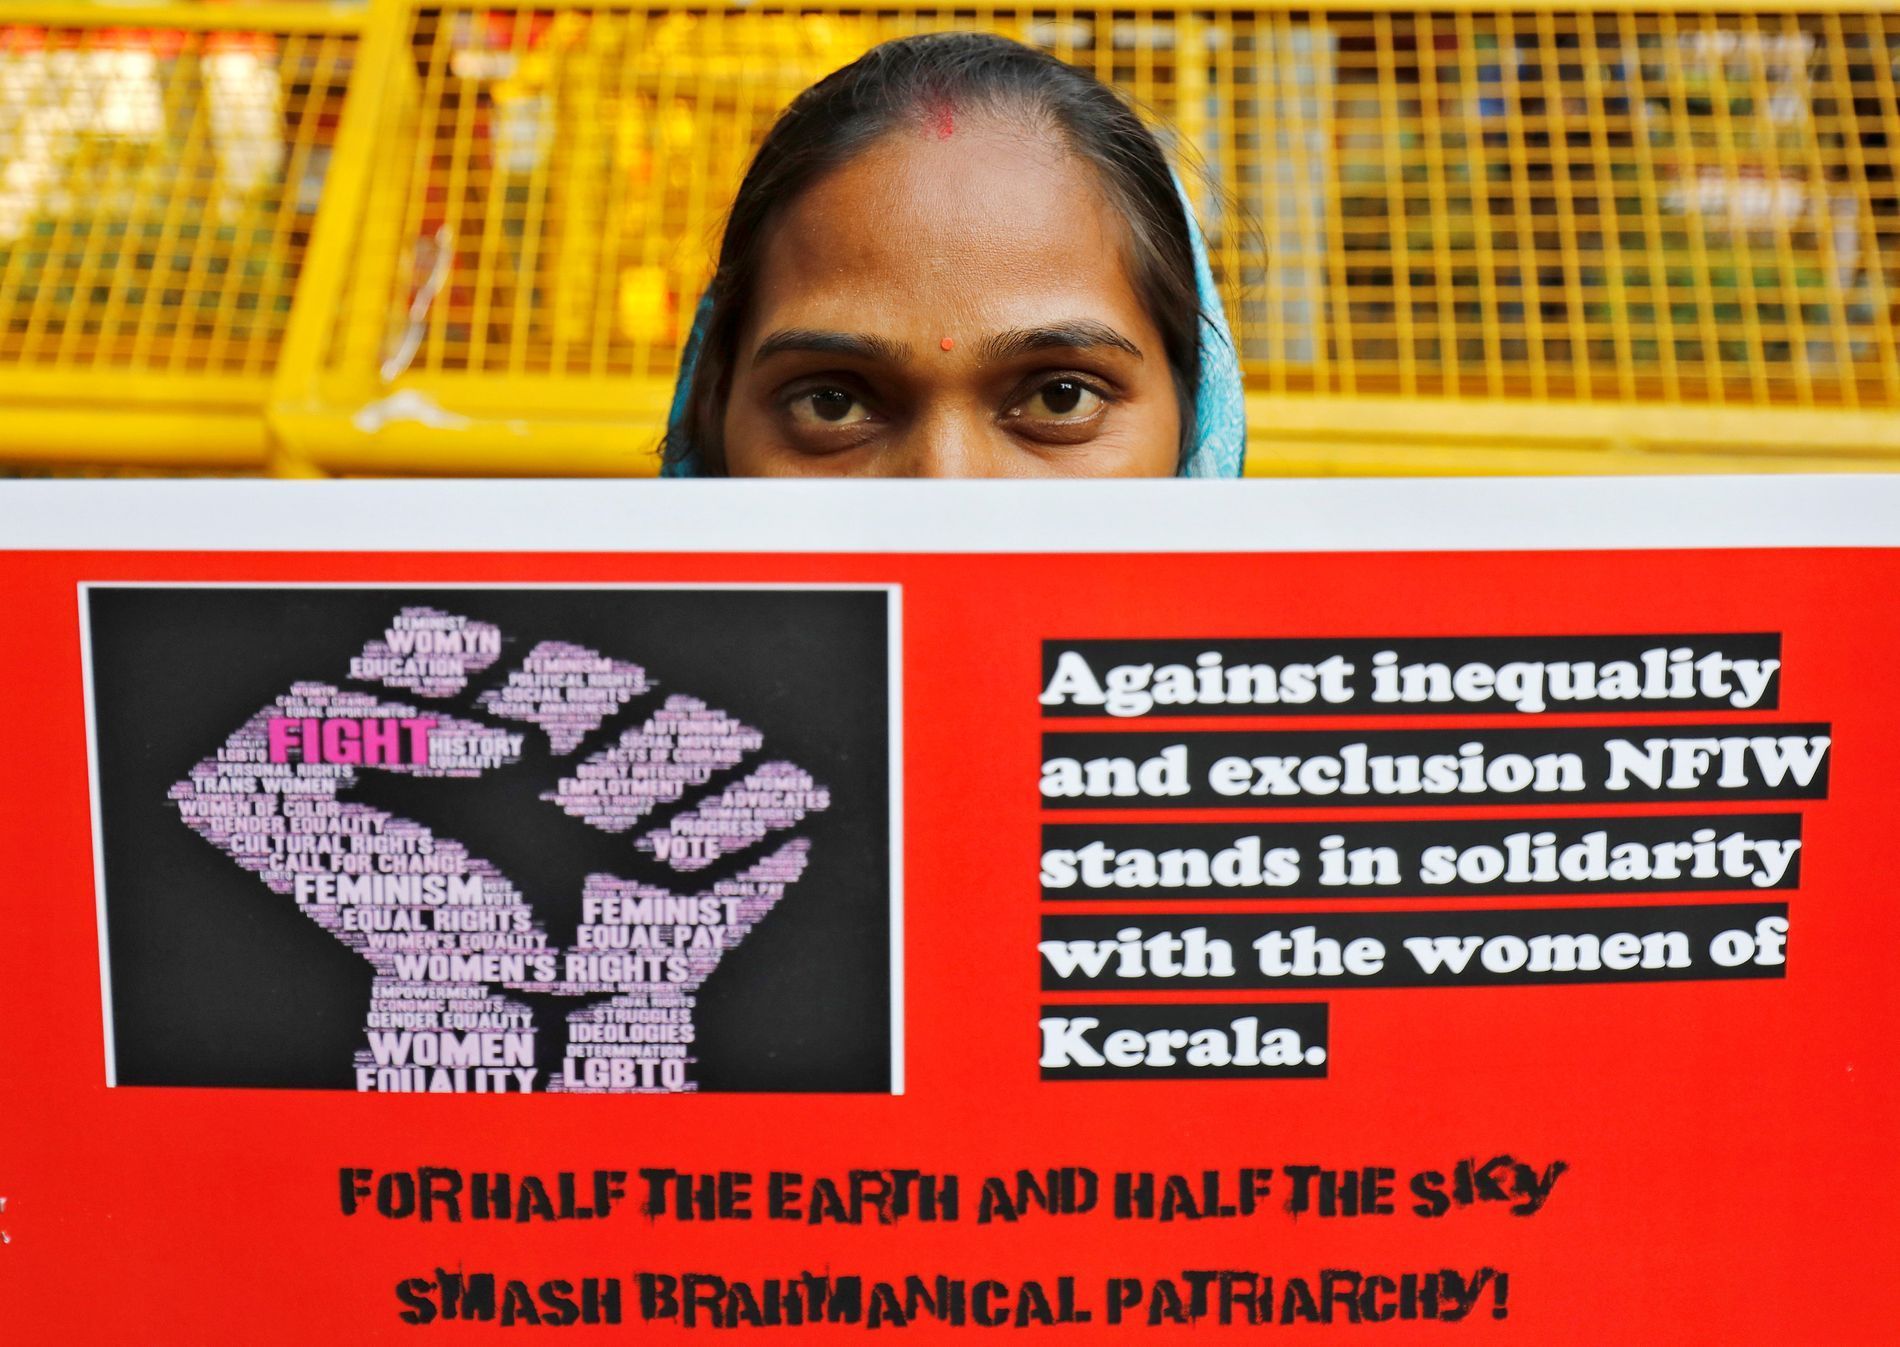 Boj za práva žen, Kérala, Indie